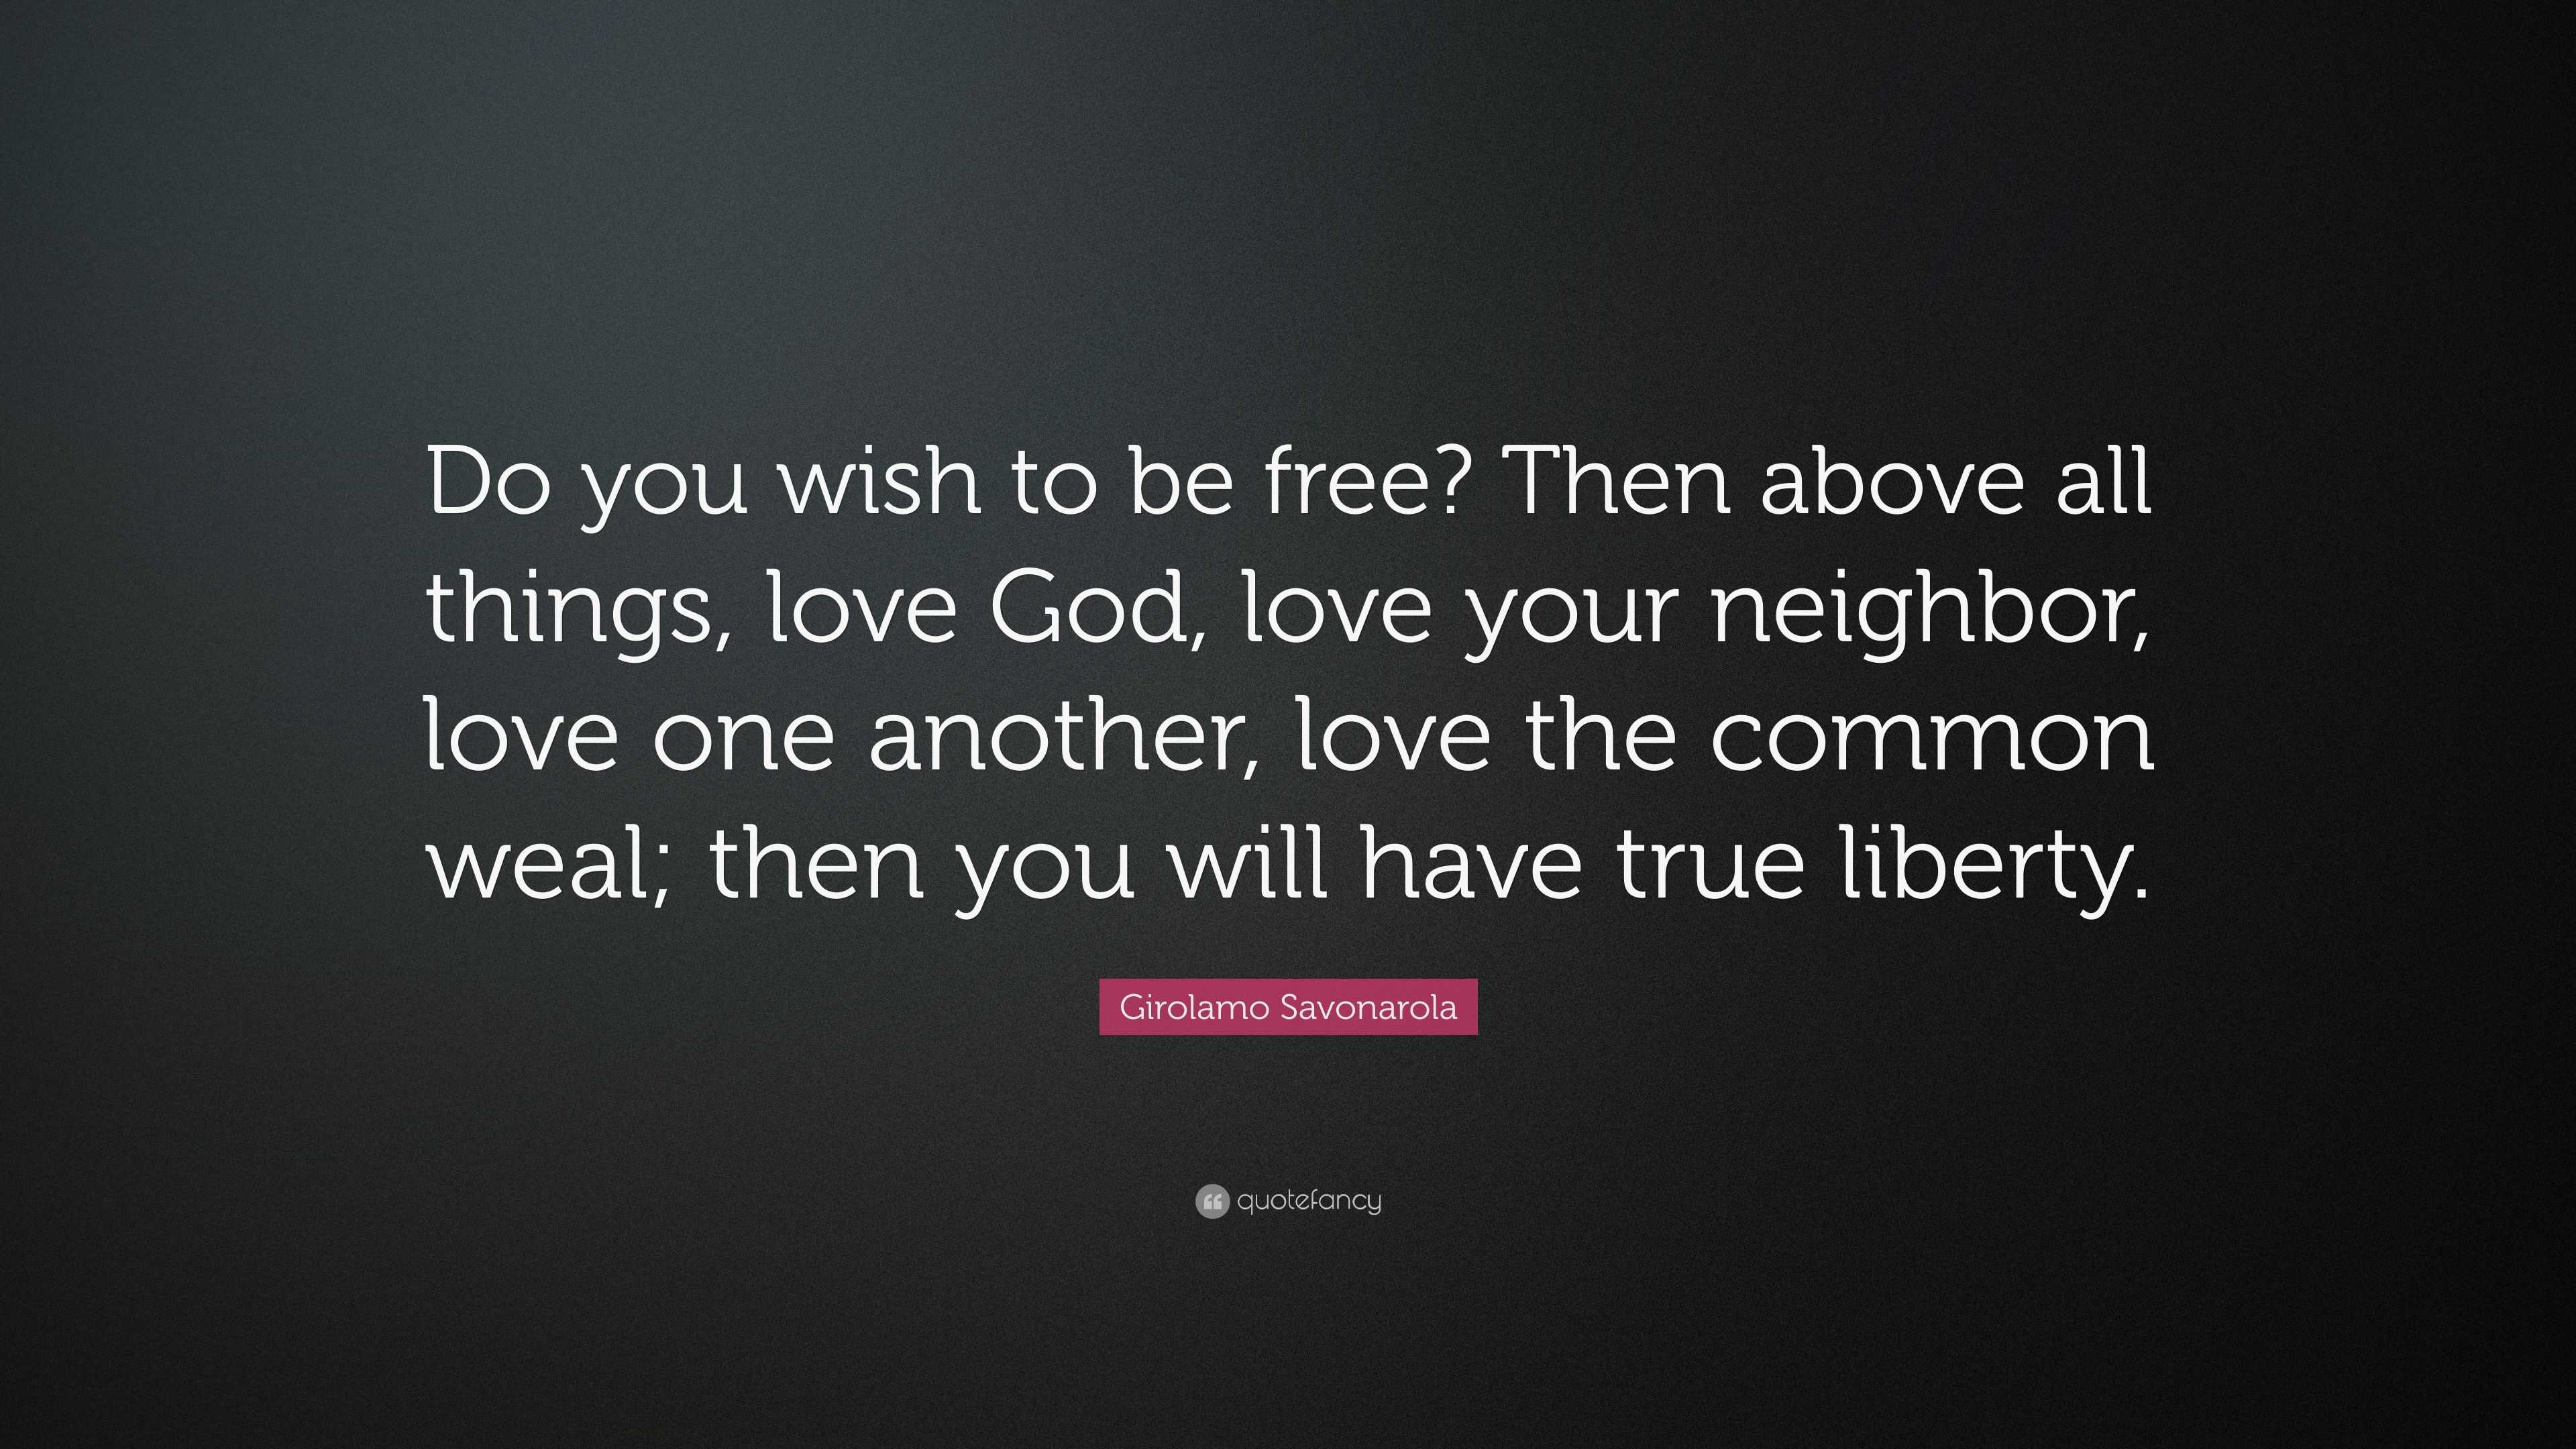 Girolamo Savonarola Quote “Do you wish to be free Then above all things